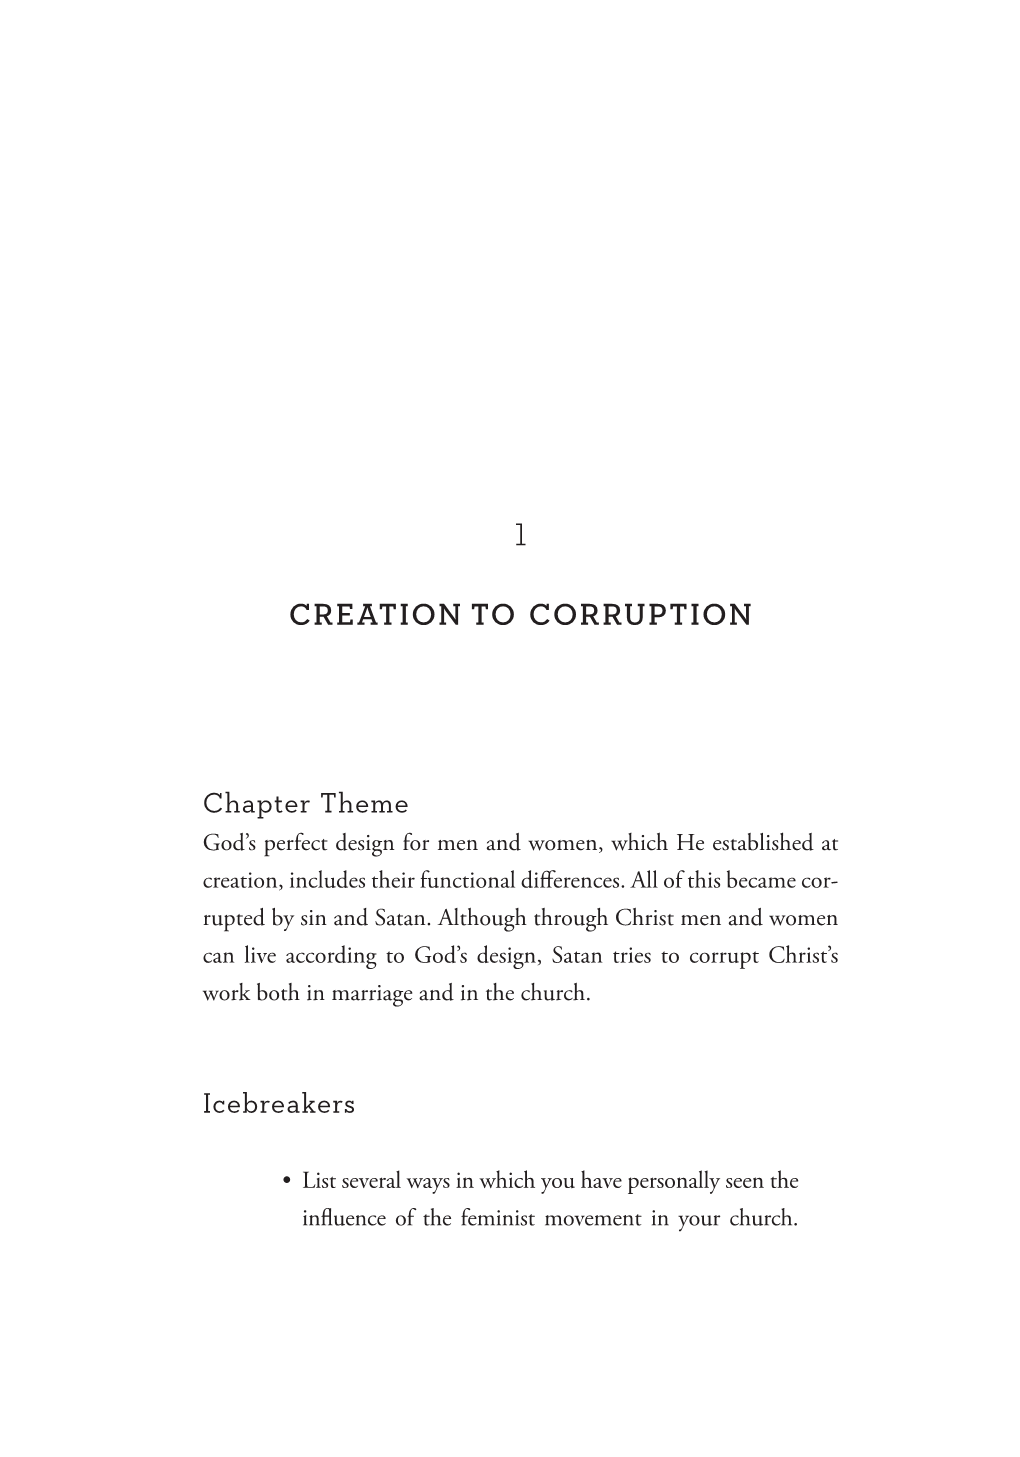 Creation to Corruption